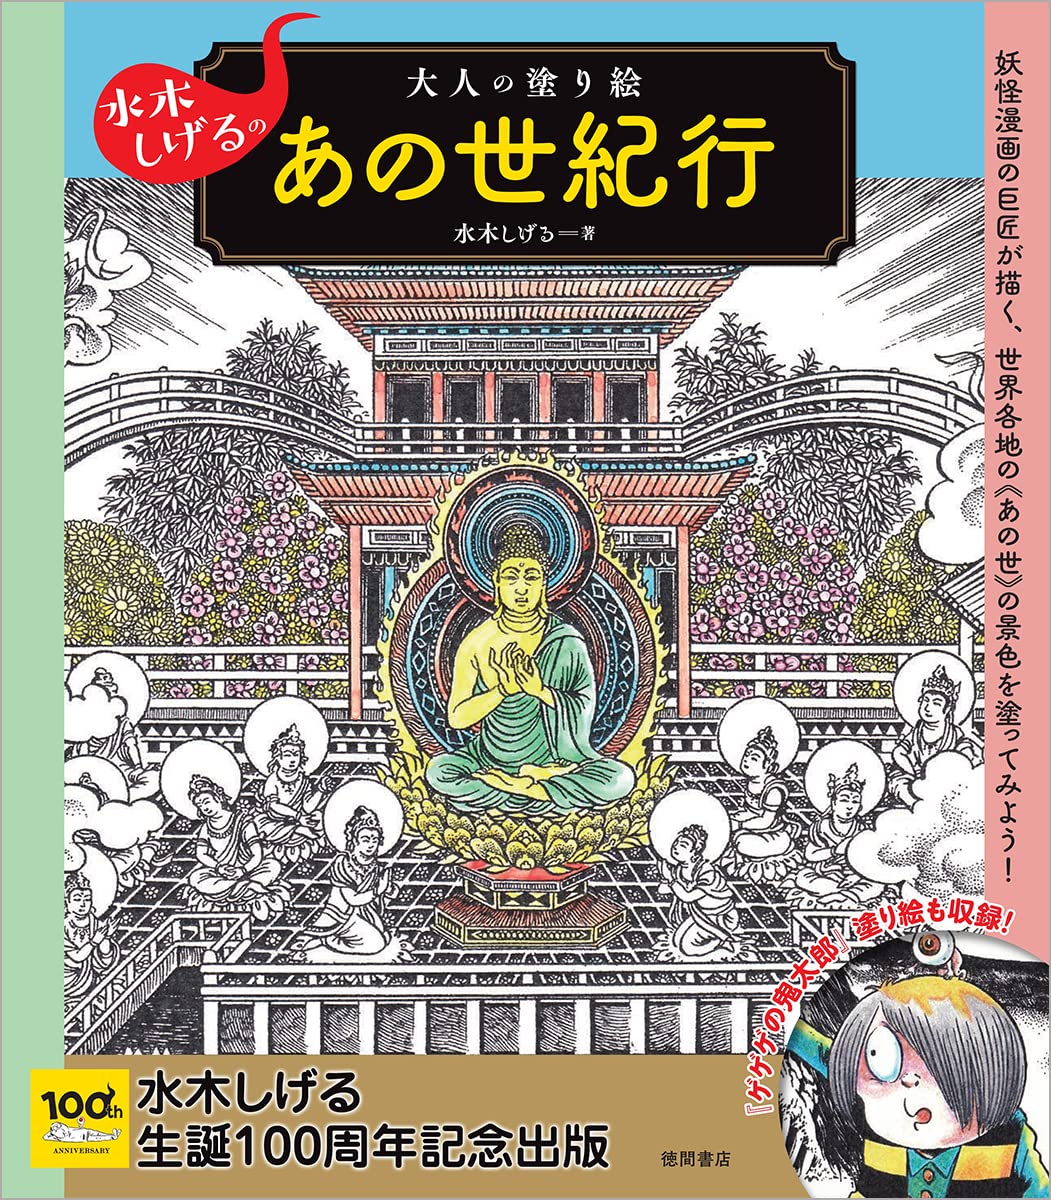 [Pre-order] Shigeru Mizuki's Adult Coloring Book by Shigeru Mizuki